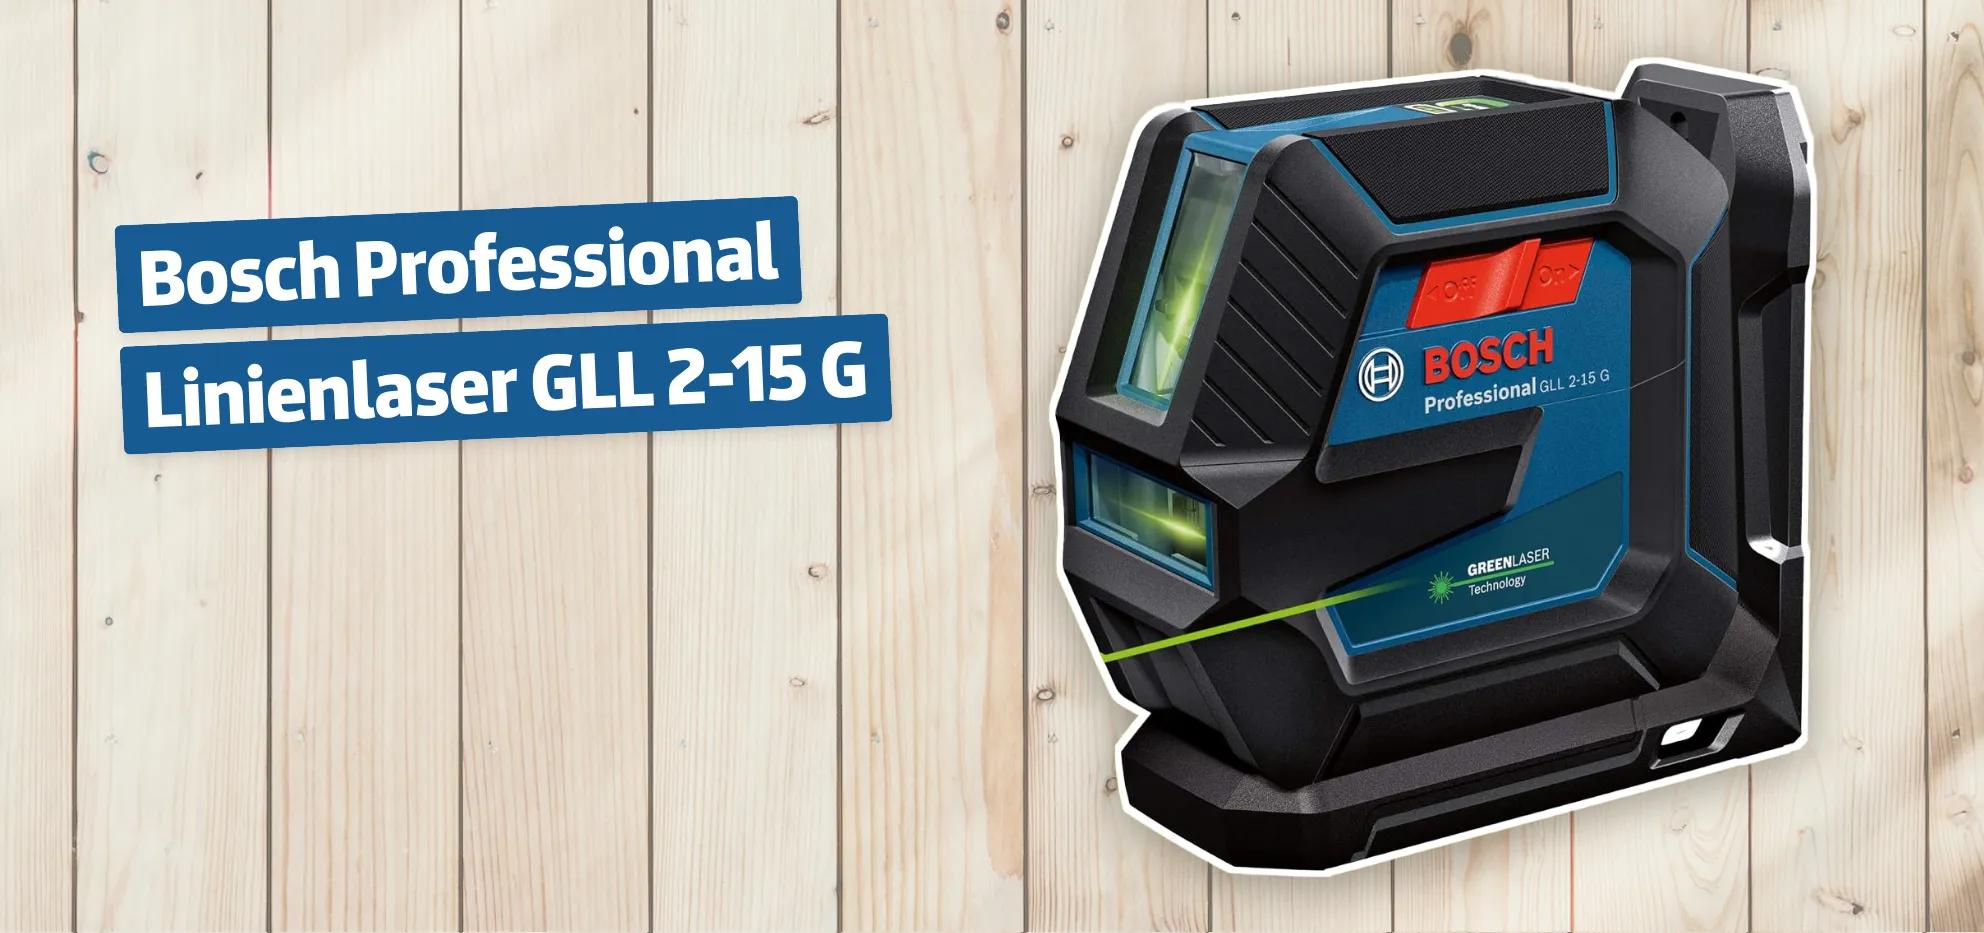 Bosch Professional Linienlaser GLL 2-15 G